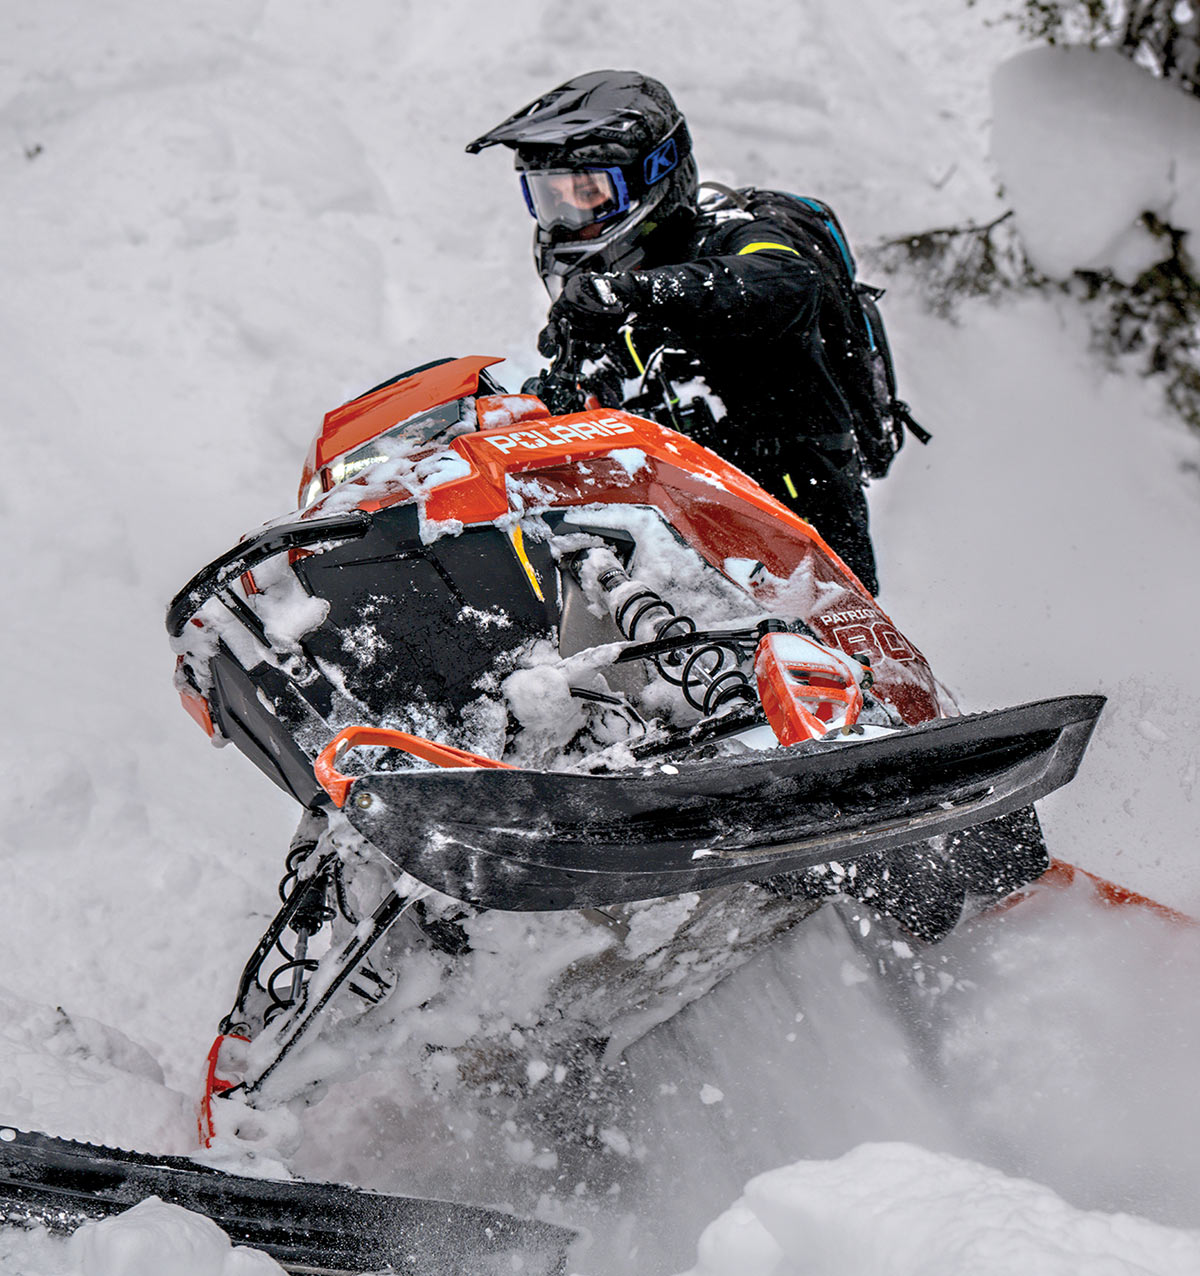 Rider on an orange Polaris in deep snow